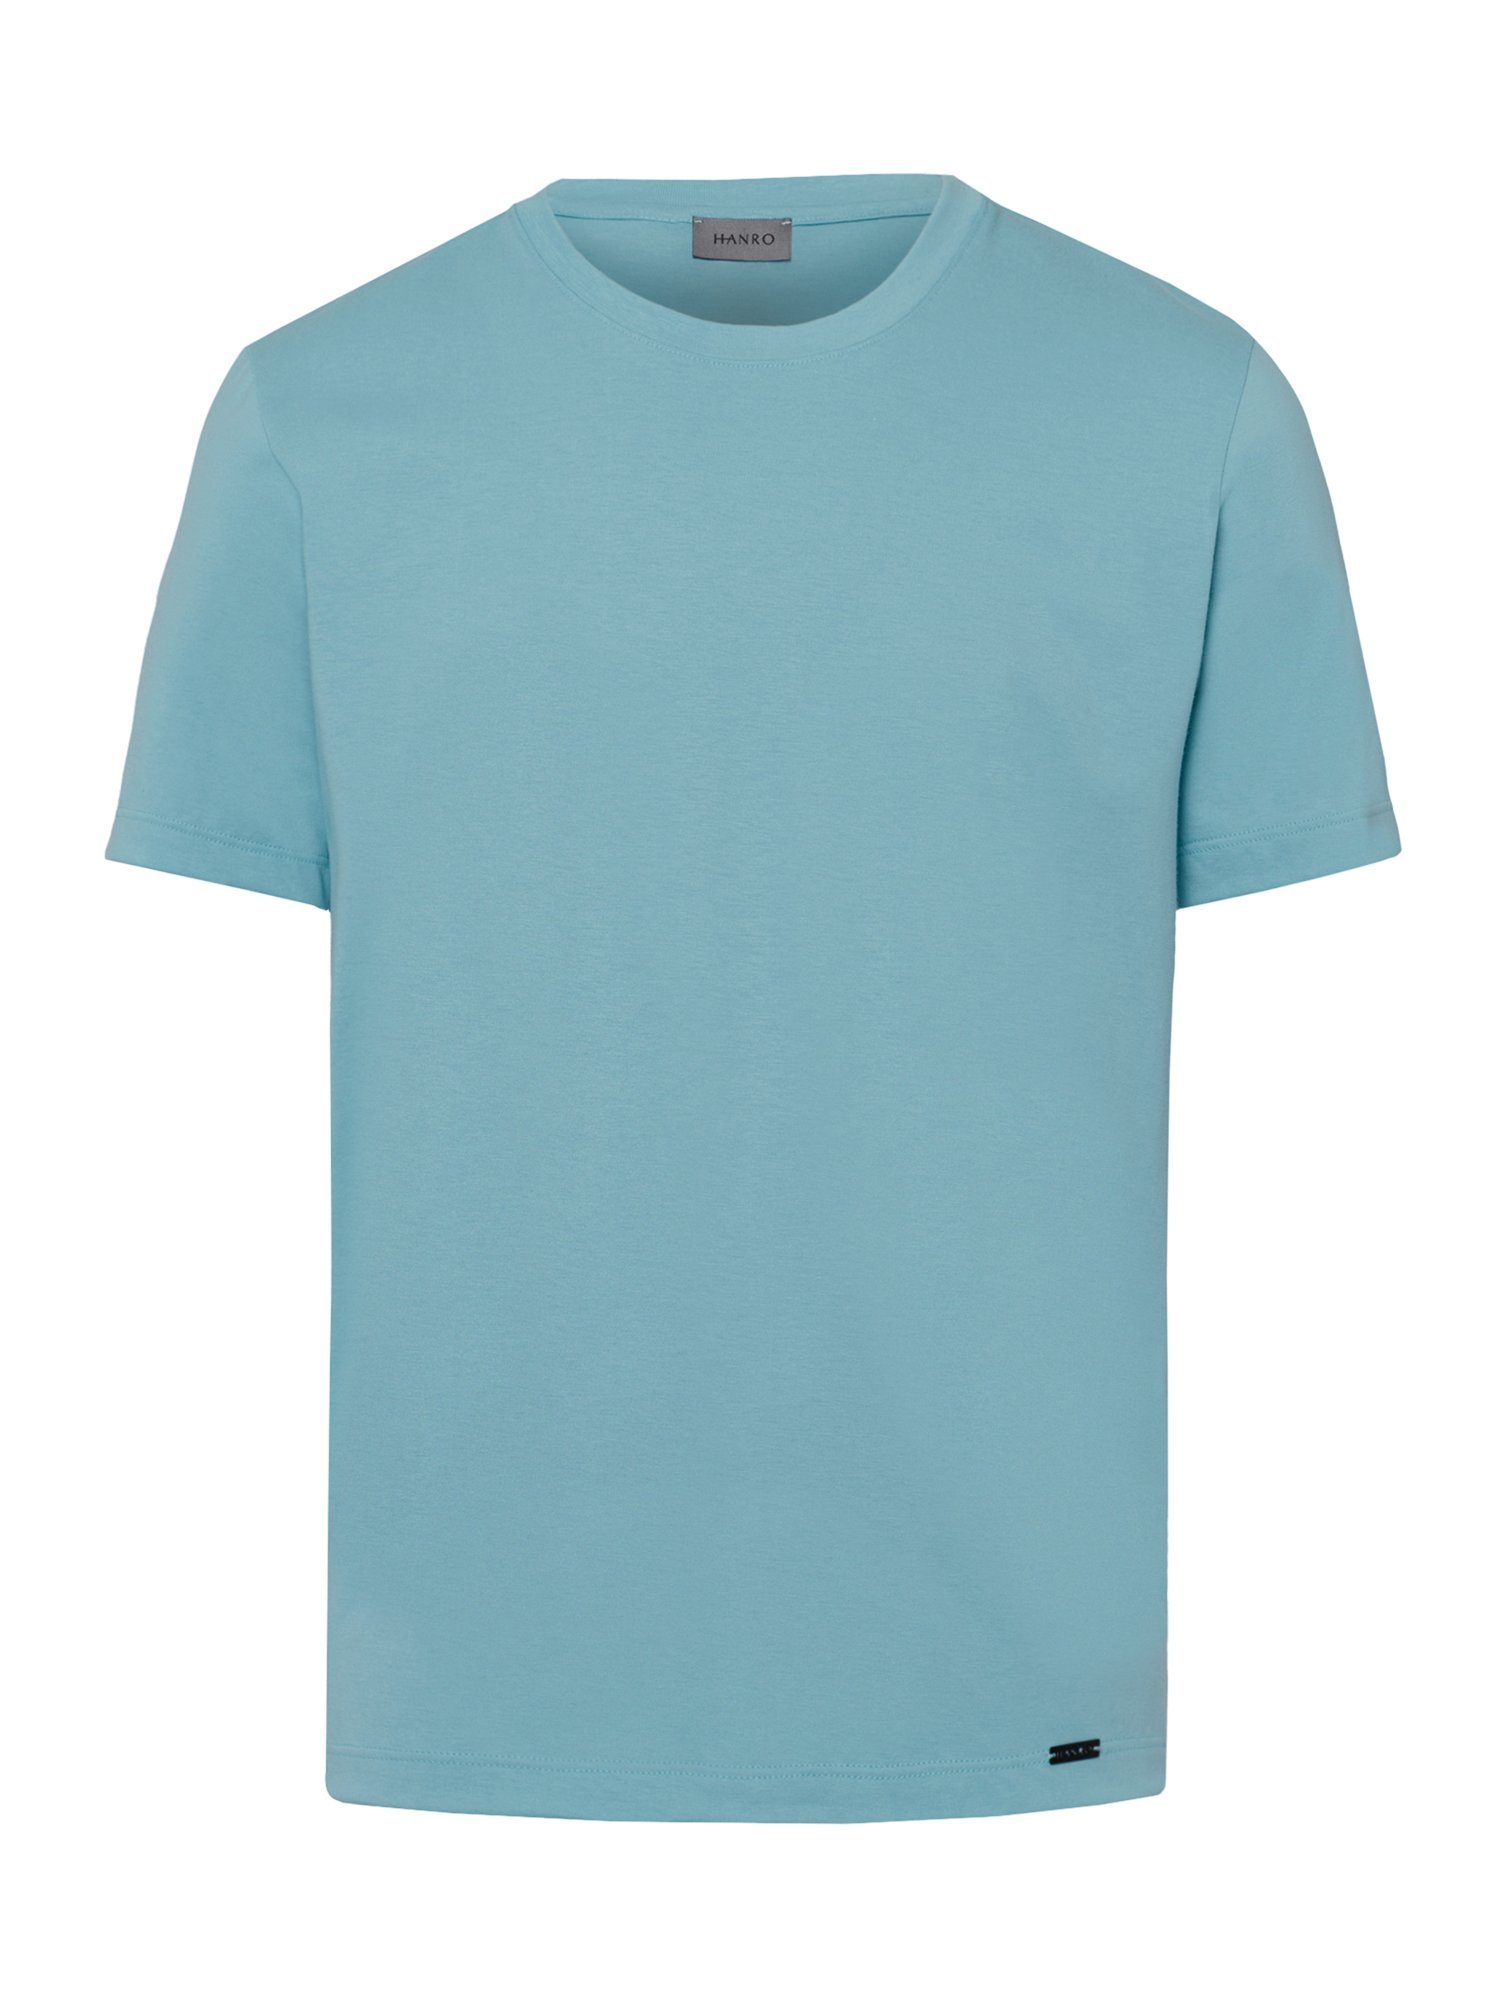 Living Shirts blue arctic Hanro T-Shirt